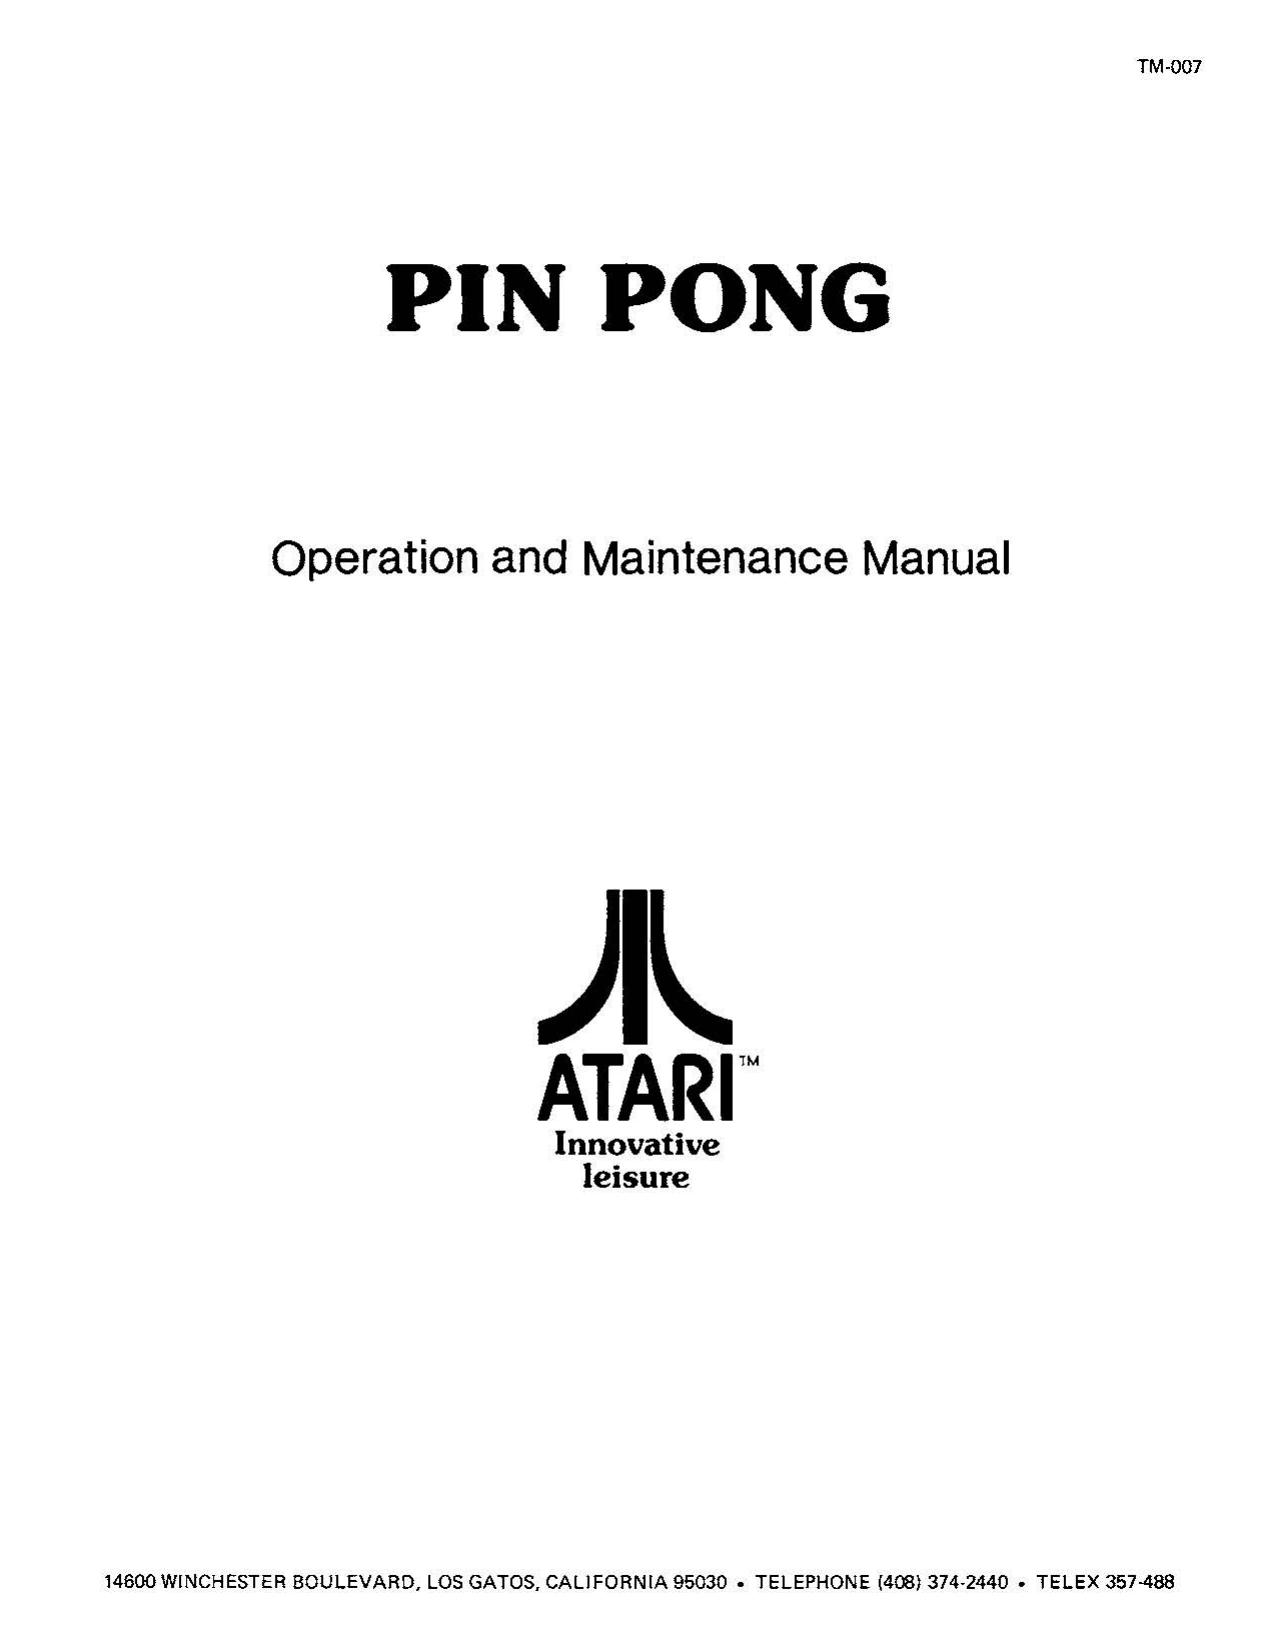 Pin Pong (TM-007) (Operation & Maintenance) (U)